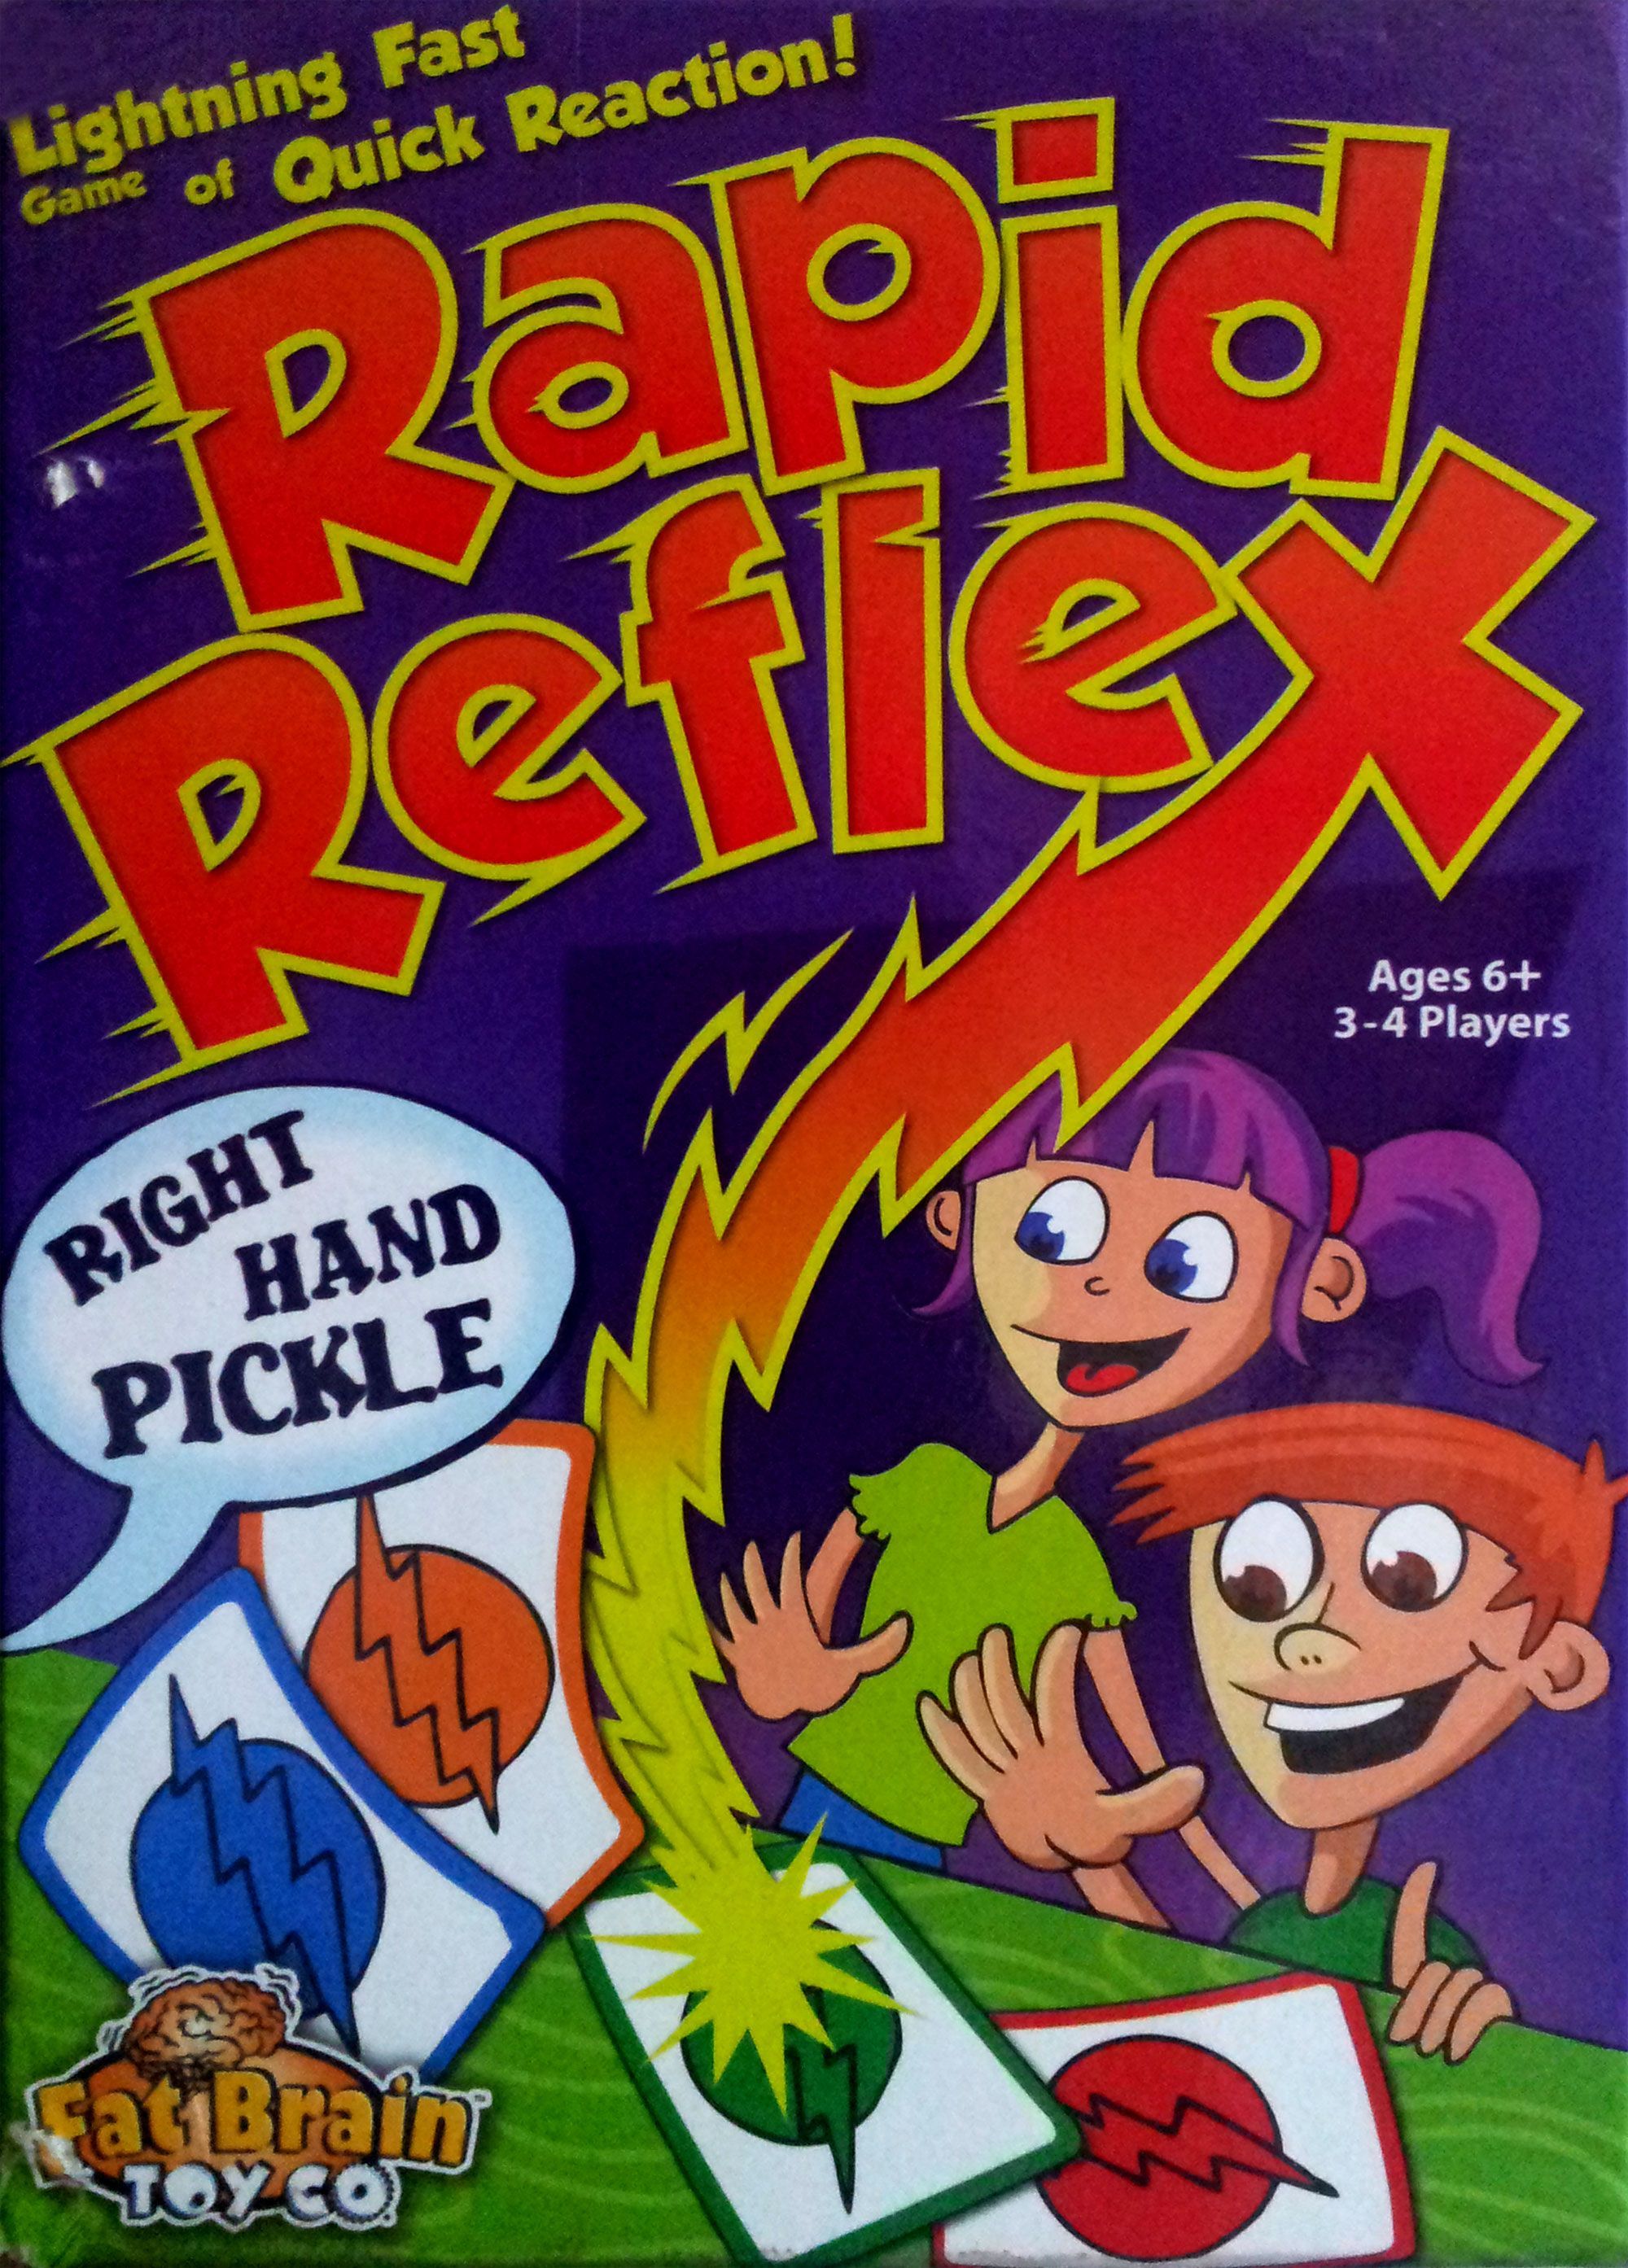 Rapid Reflex